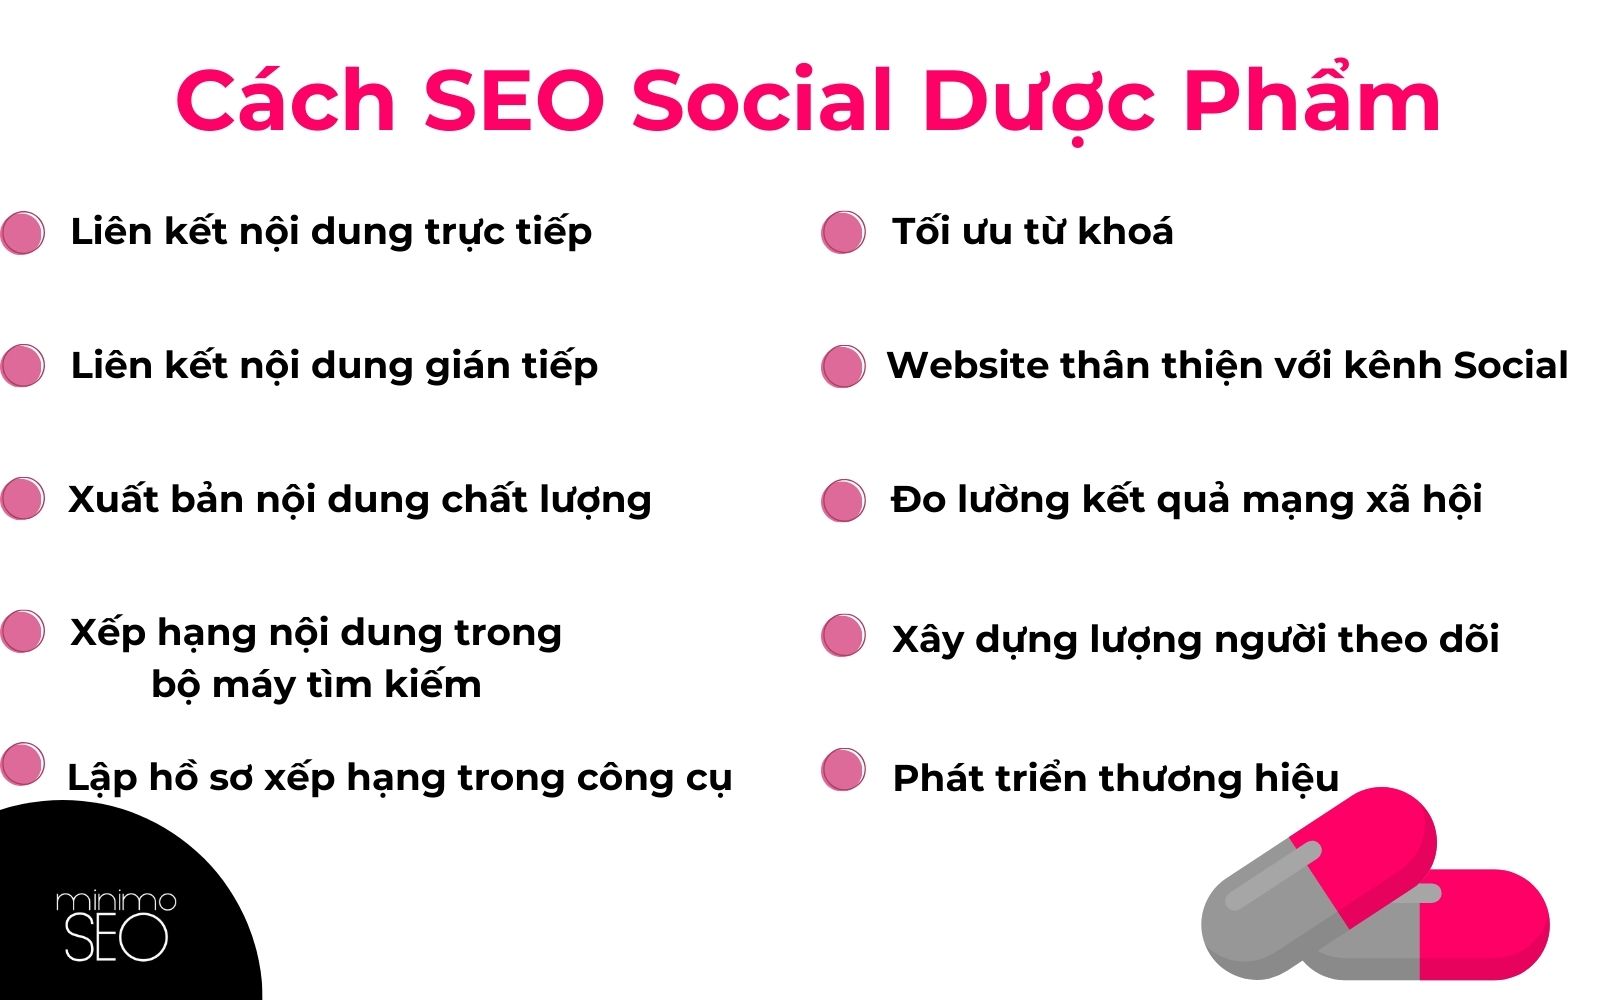 Phuong-phap-seo-social-nganh-duoc